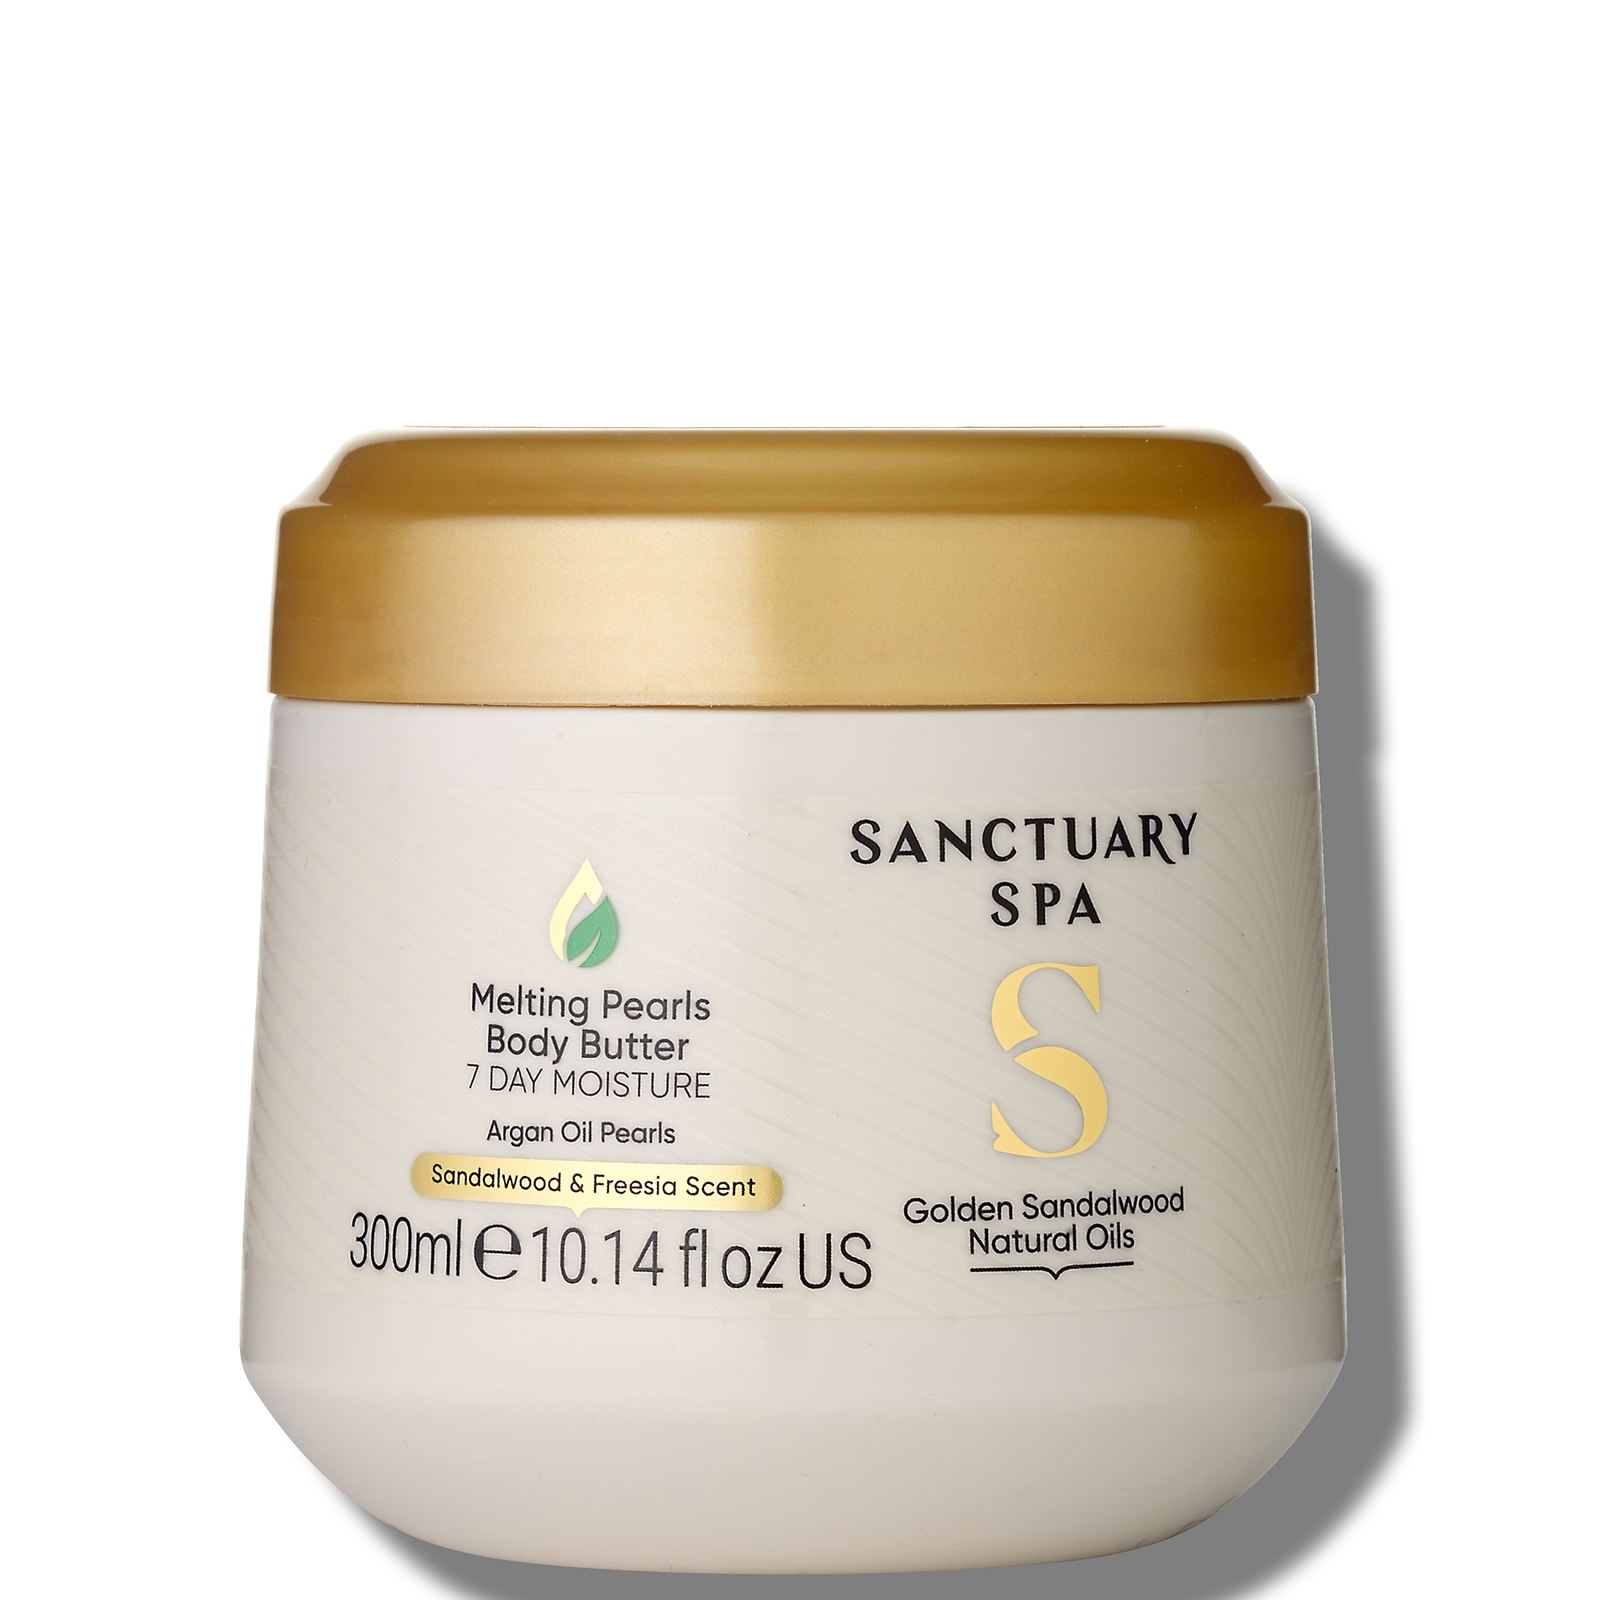 Sanctuary Spa Golden Sandalwood Melting Pearls Body Butter 300ml